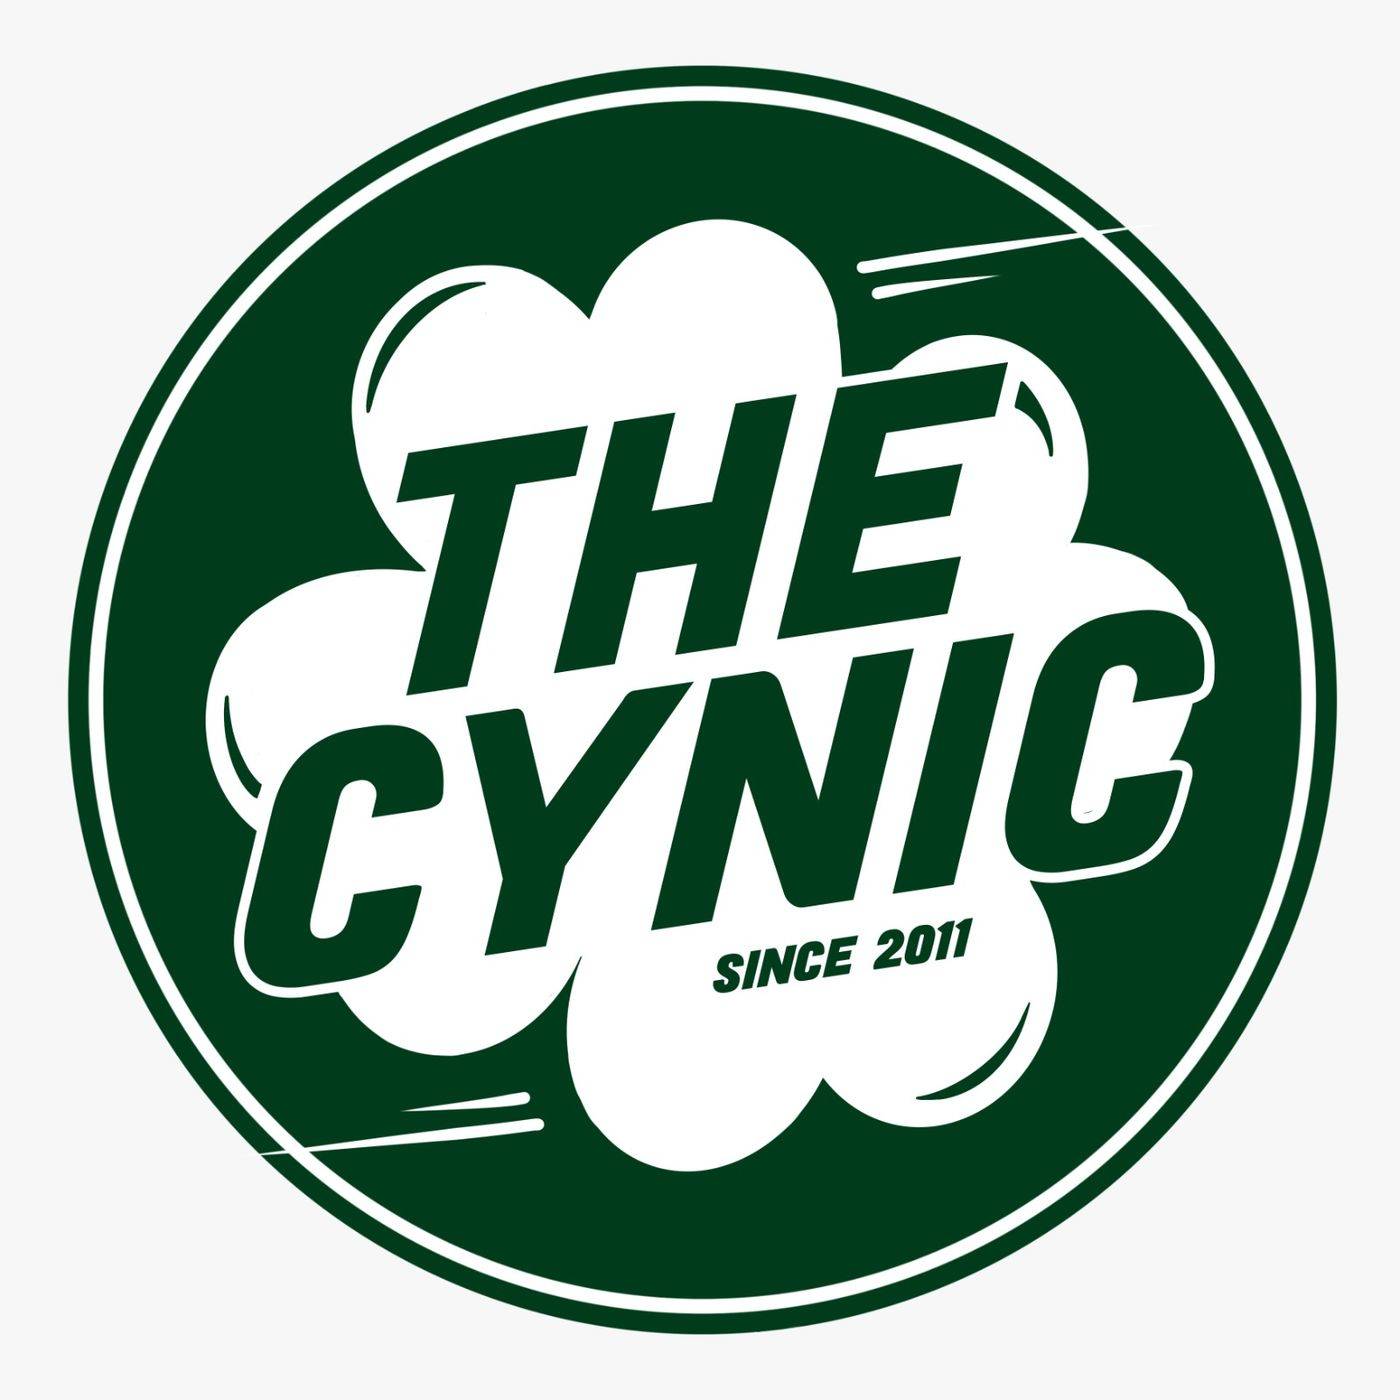 The Cynic Weekly – 25.04.2024